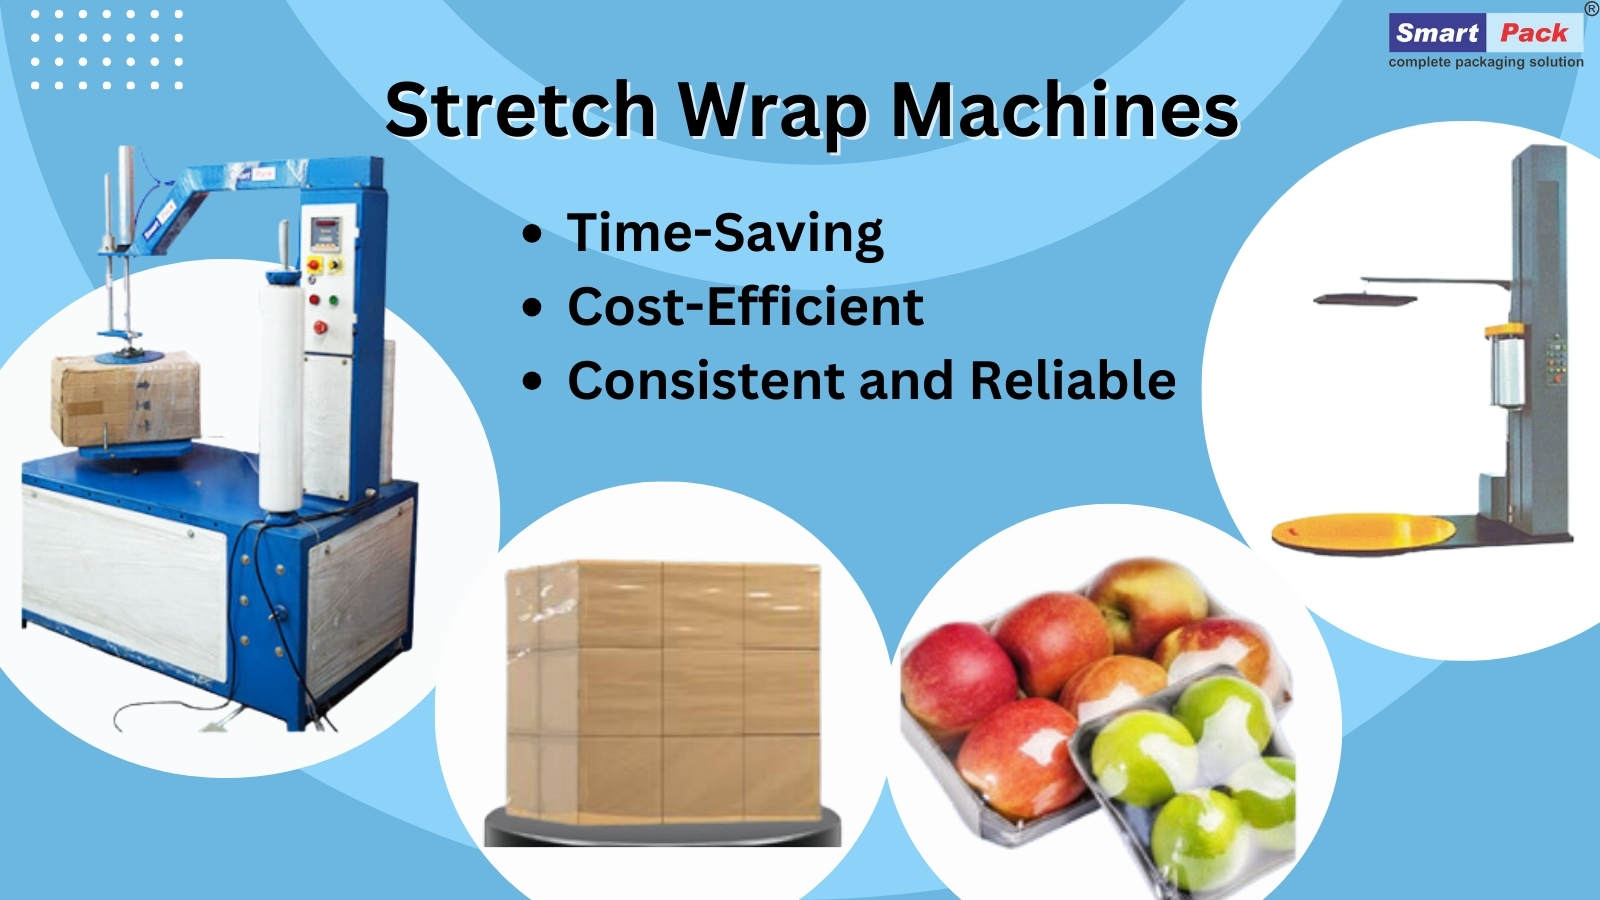 Advantages of the Stretch Wrap Machine